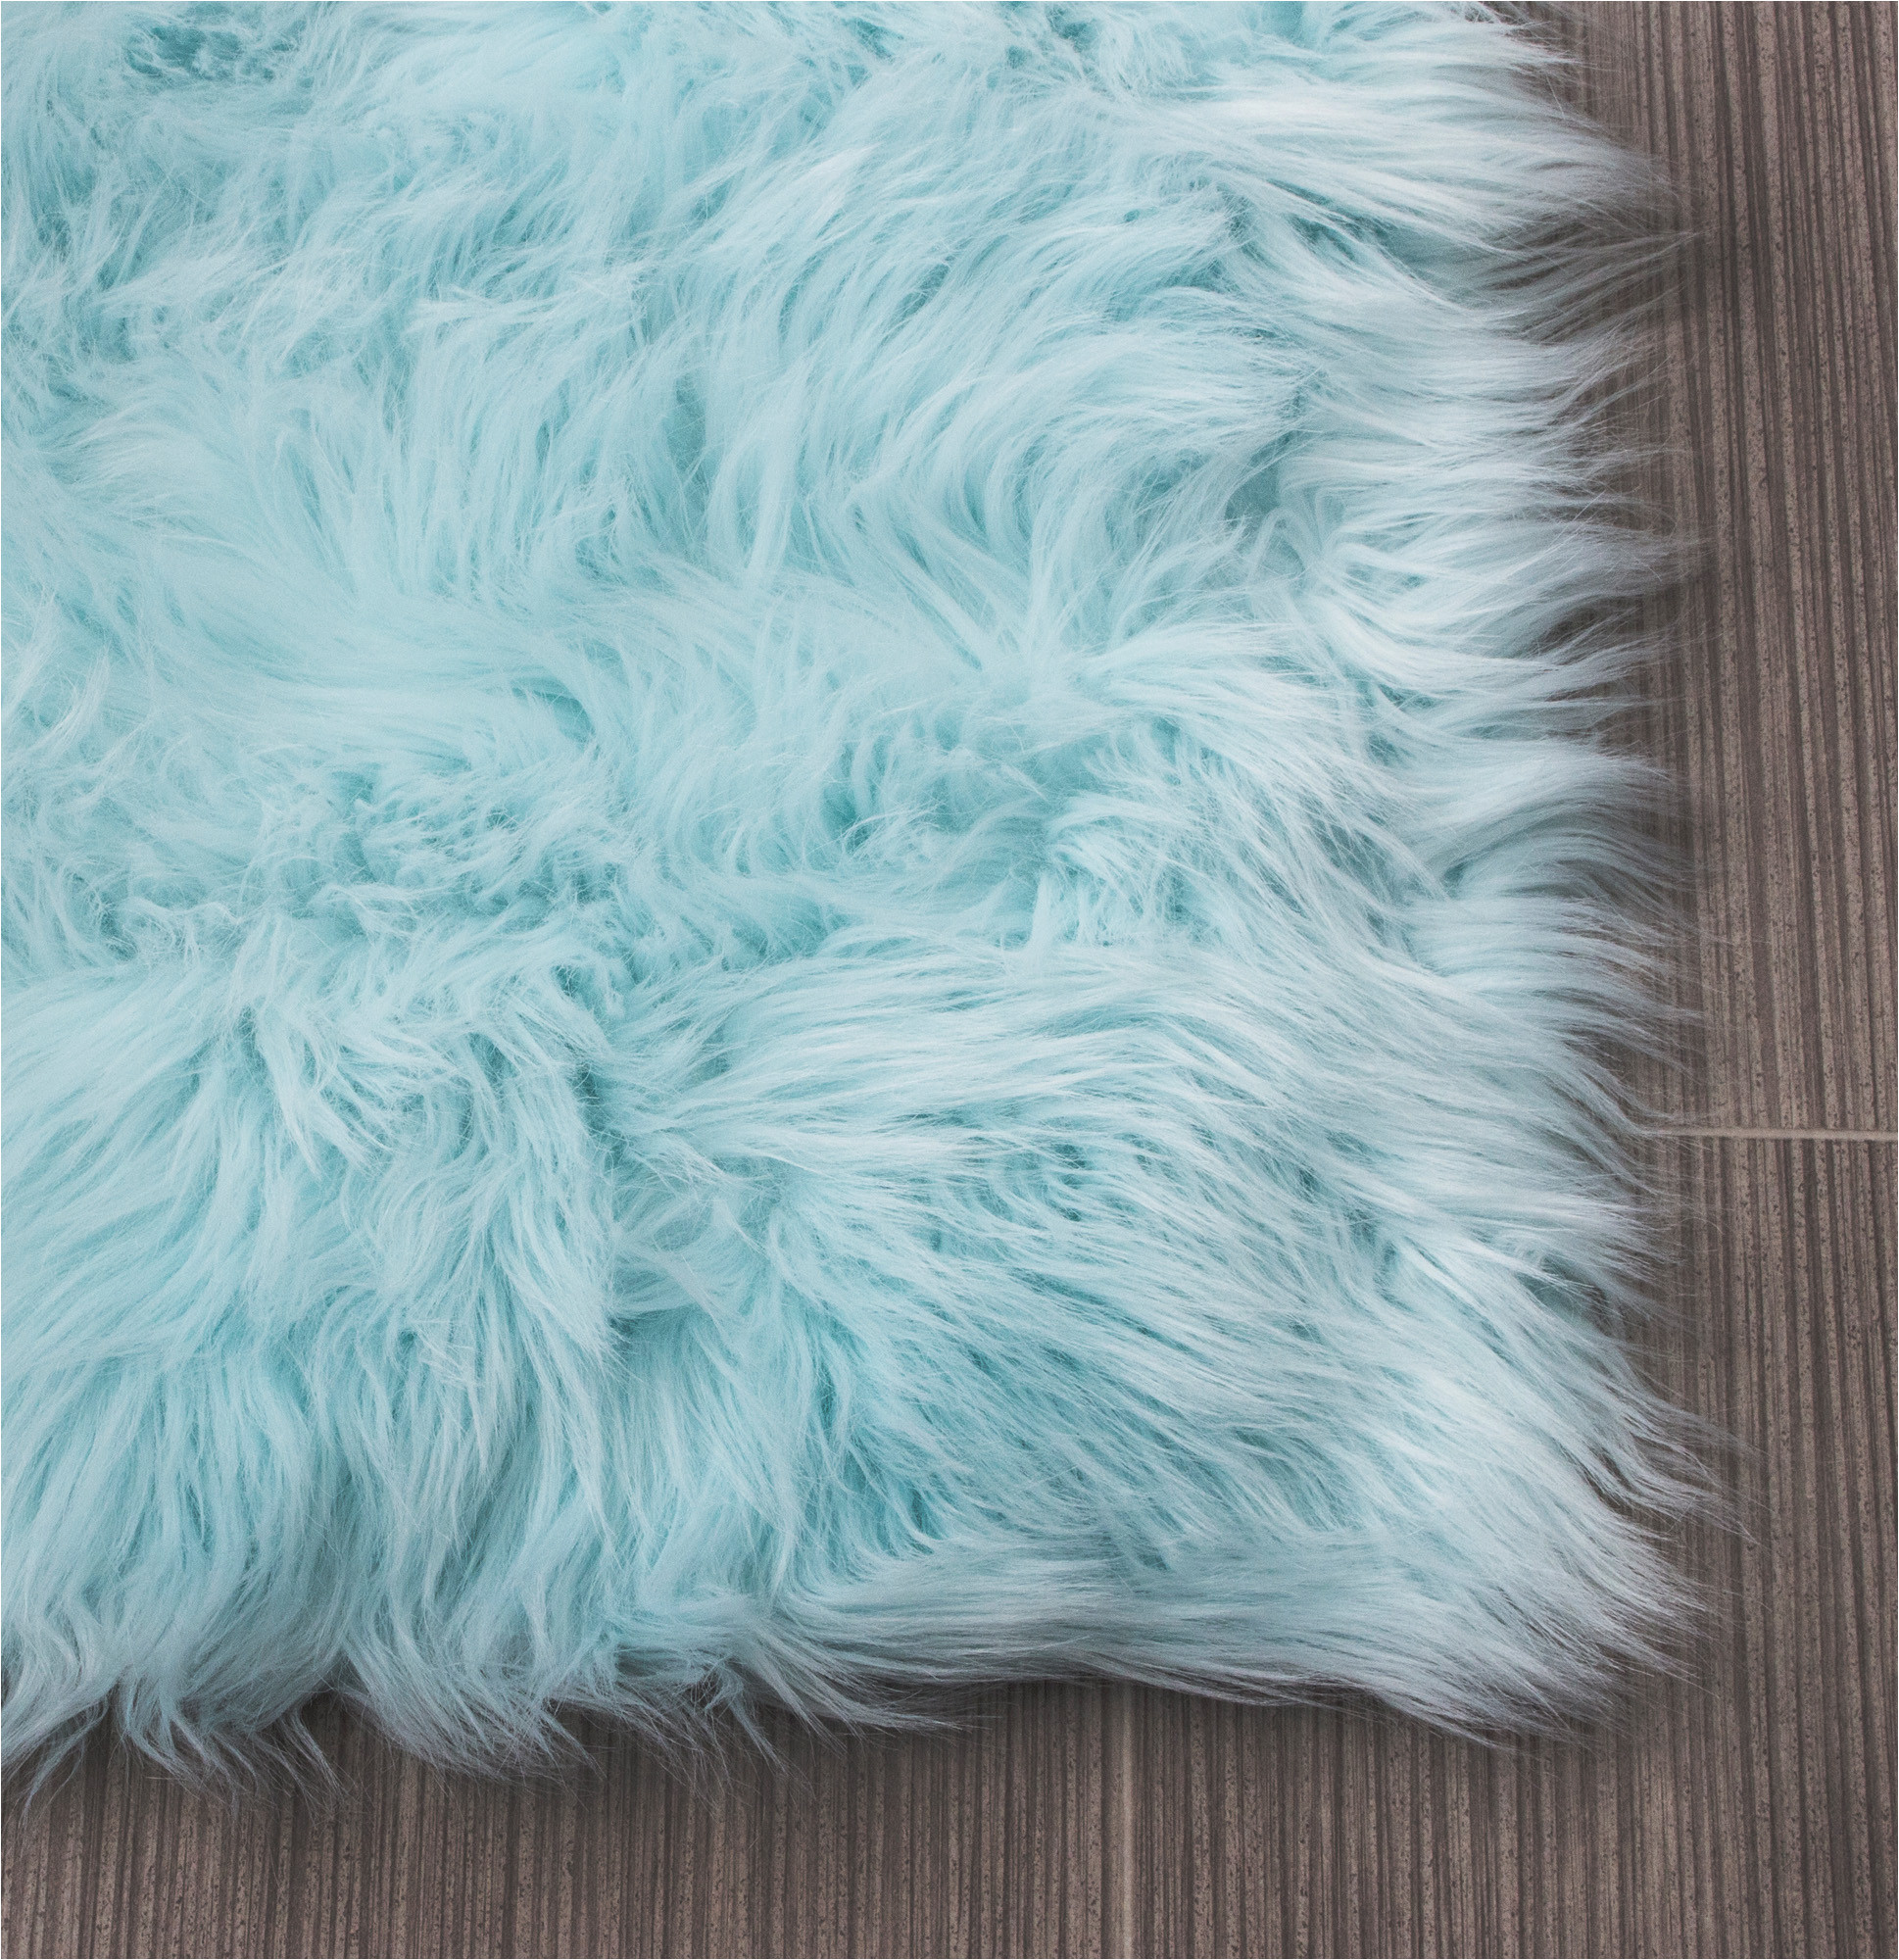 Baby Blue Fur Rug Ultra soft Faux Sheepskin Fur Rug Ser01 Light Blue 4′ X 6′